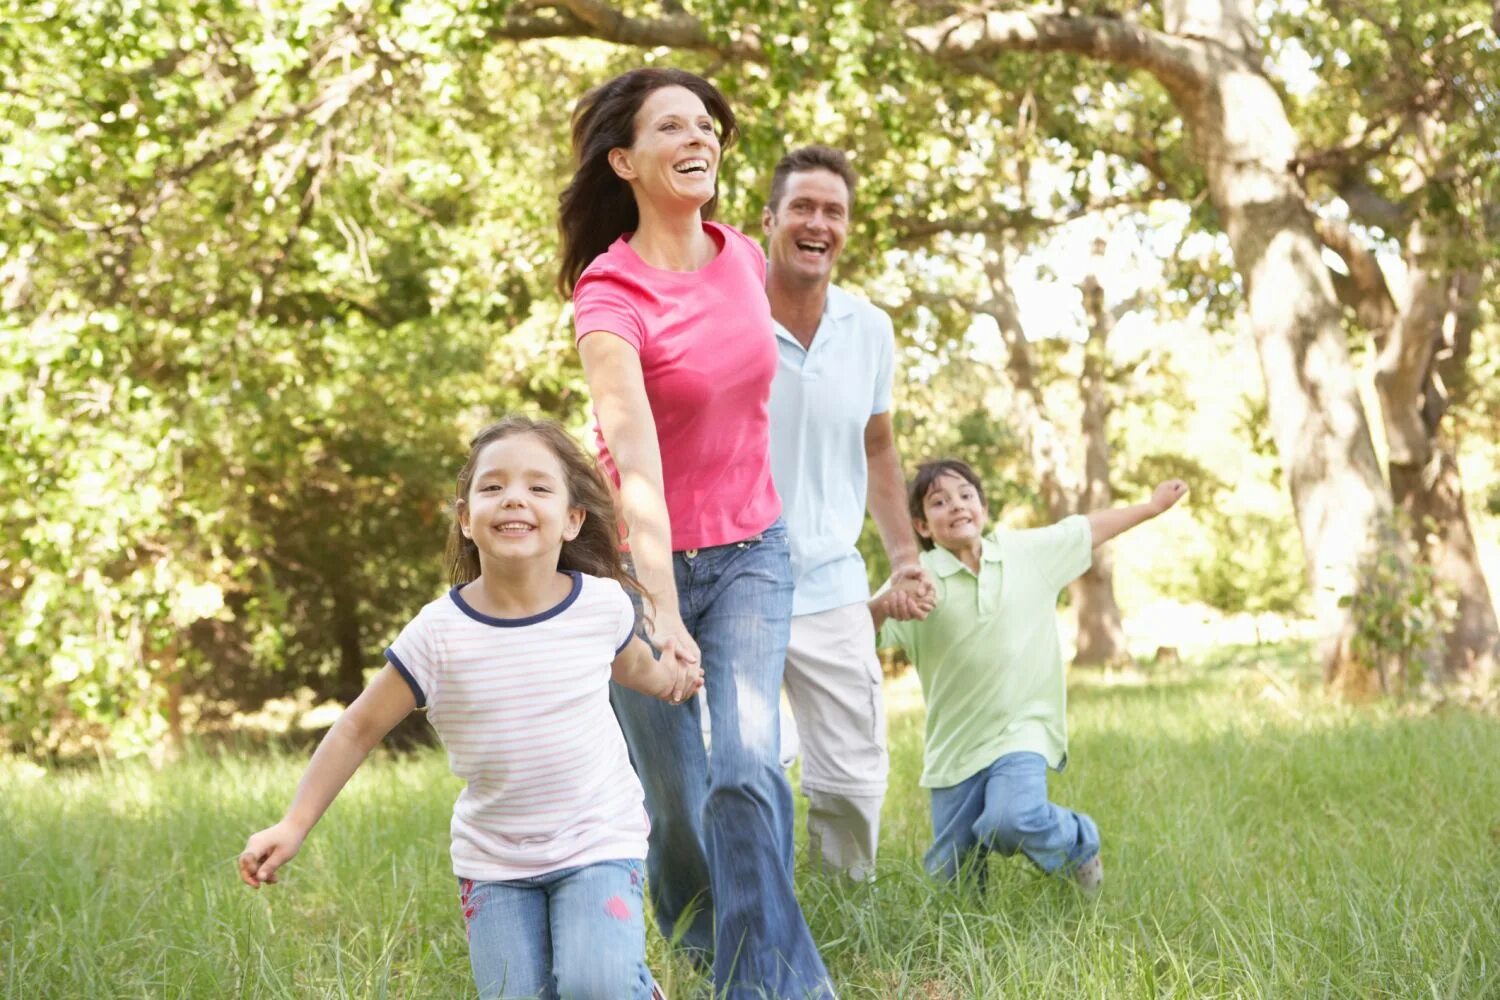 Family model stepping. Семья на прогулке. Счастливая семья на прогулке. Семья на прогулке в парке. Семейная прогулка.